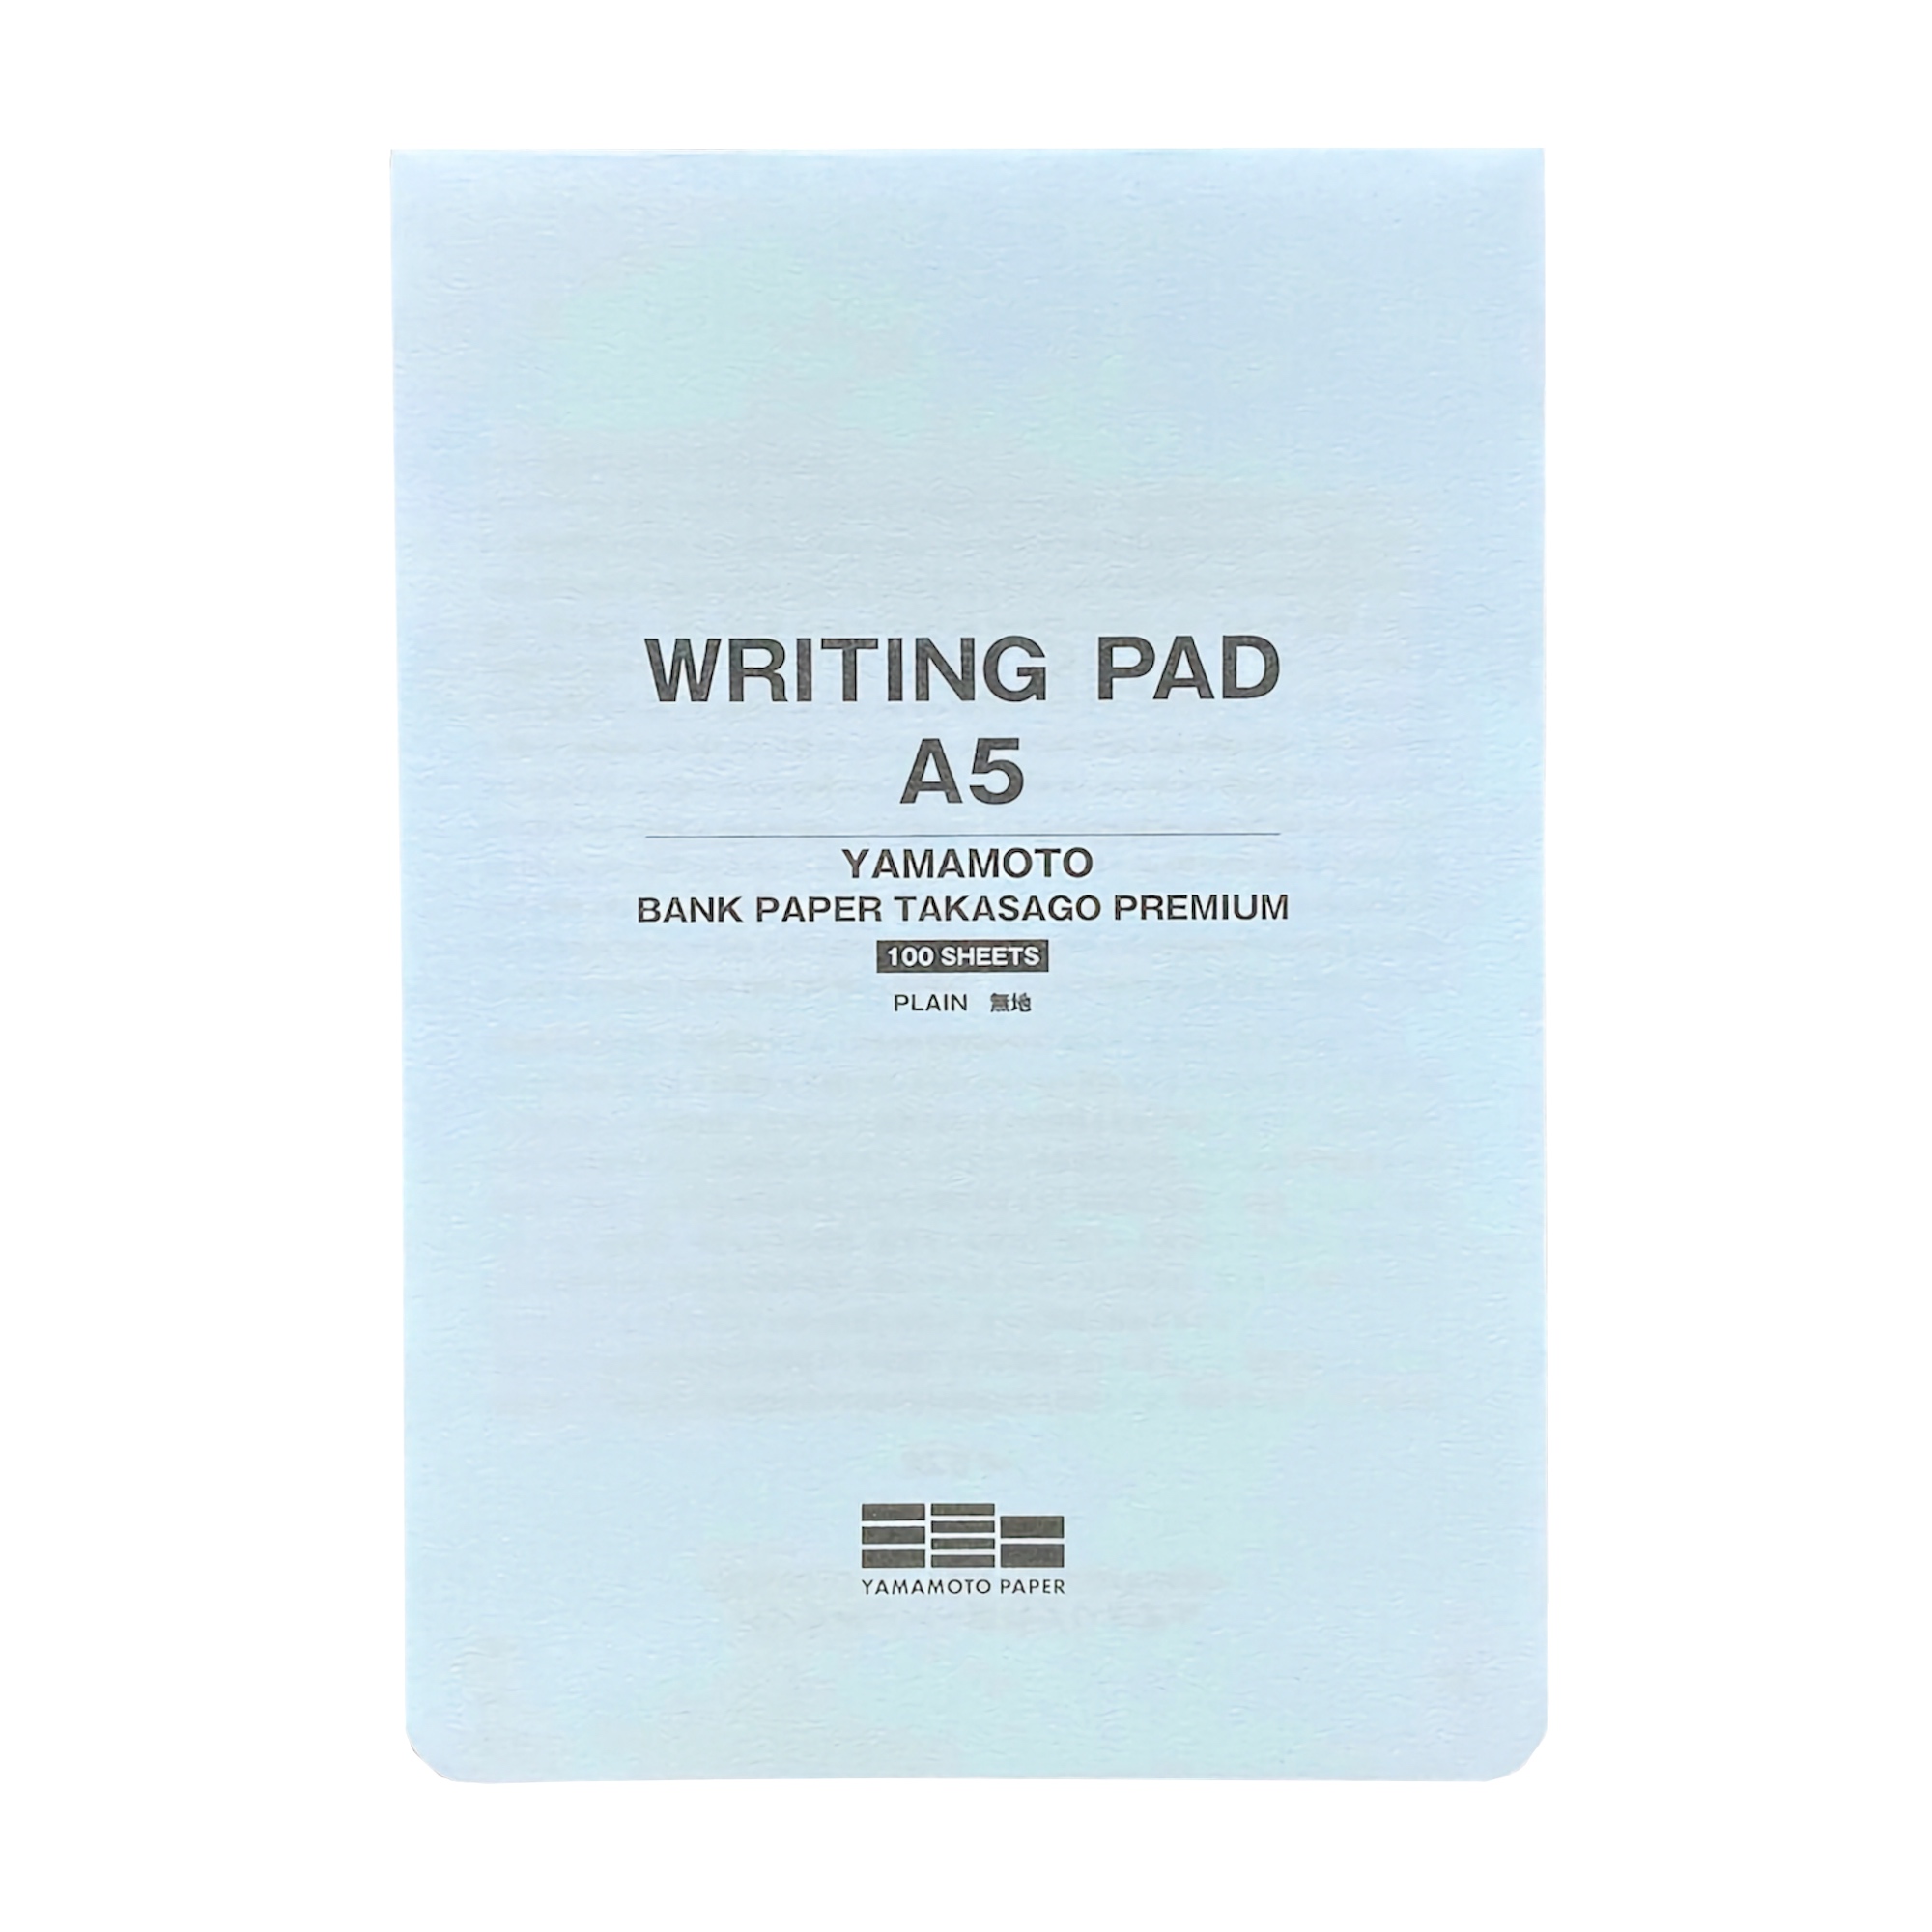 Yamamoto Writing Pad A5 / Bank Paper Takasago Premium